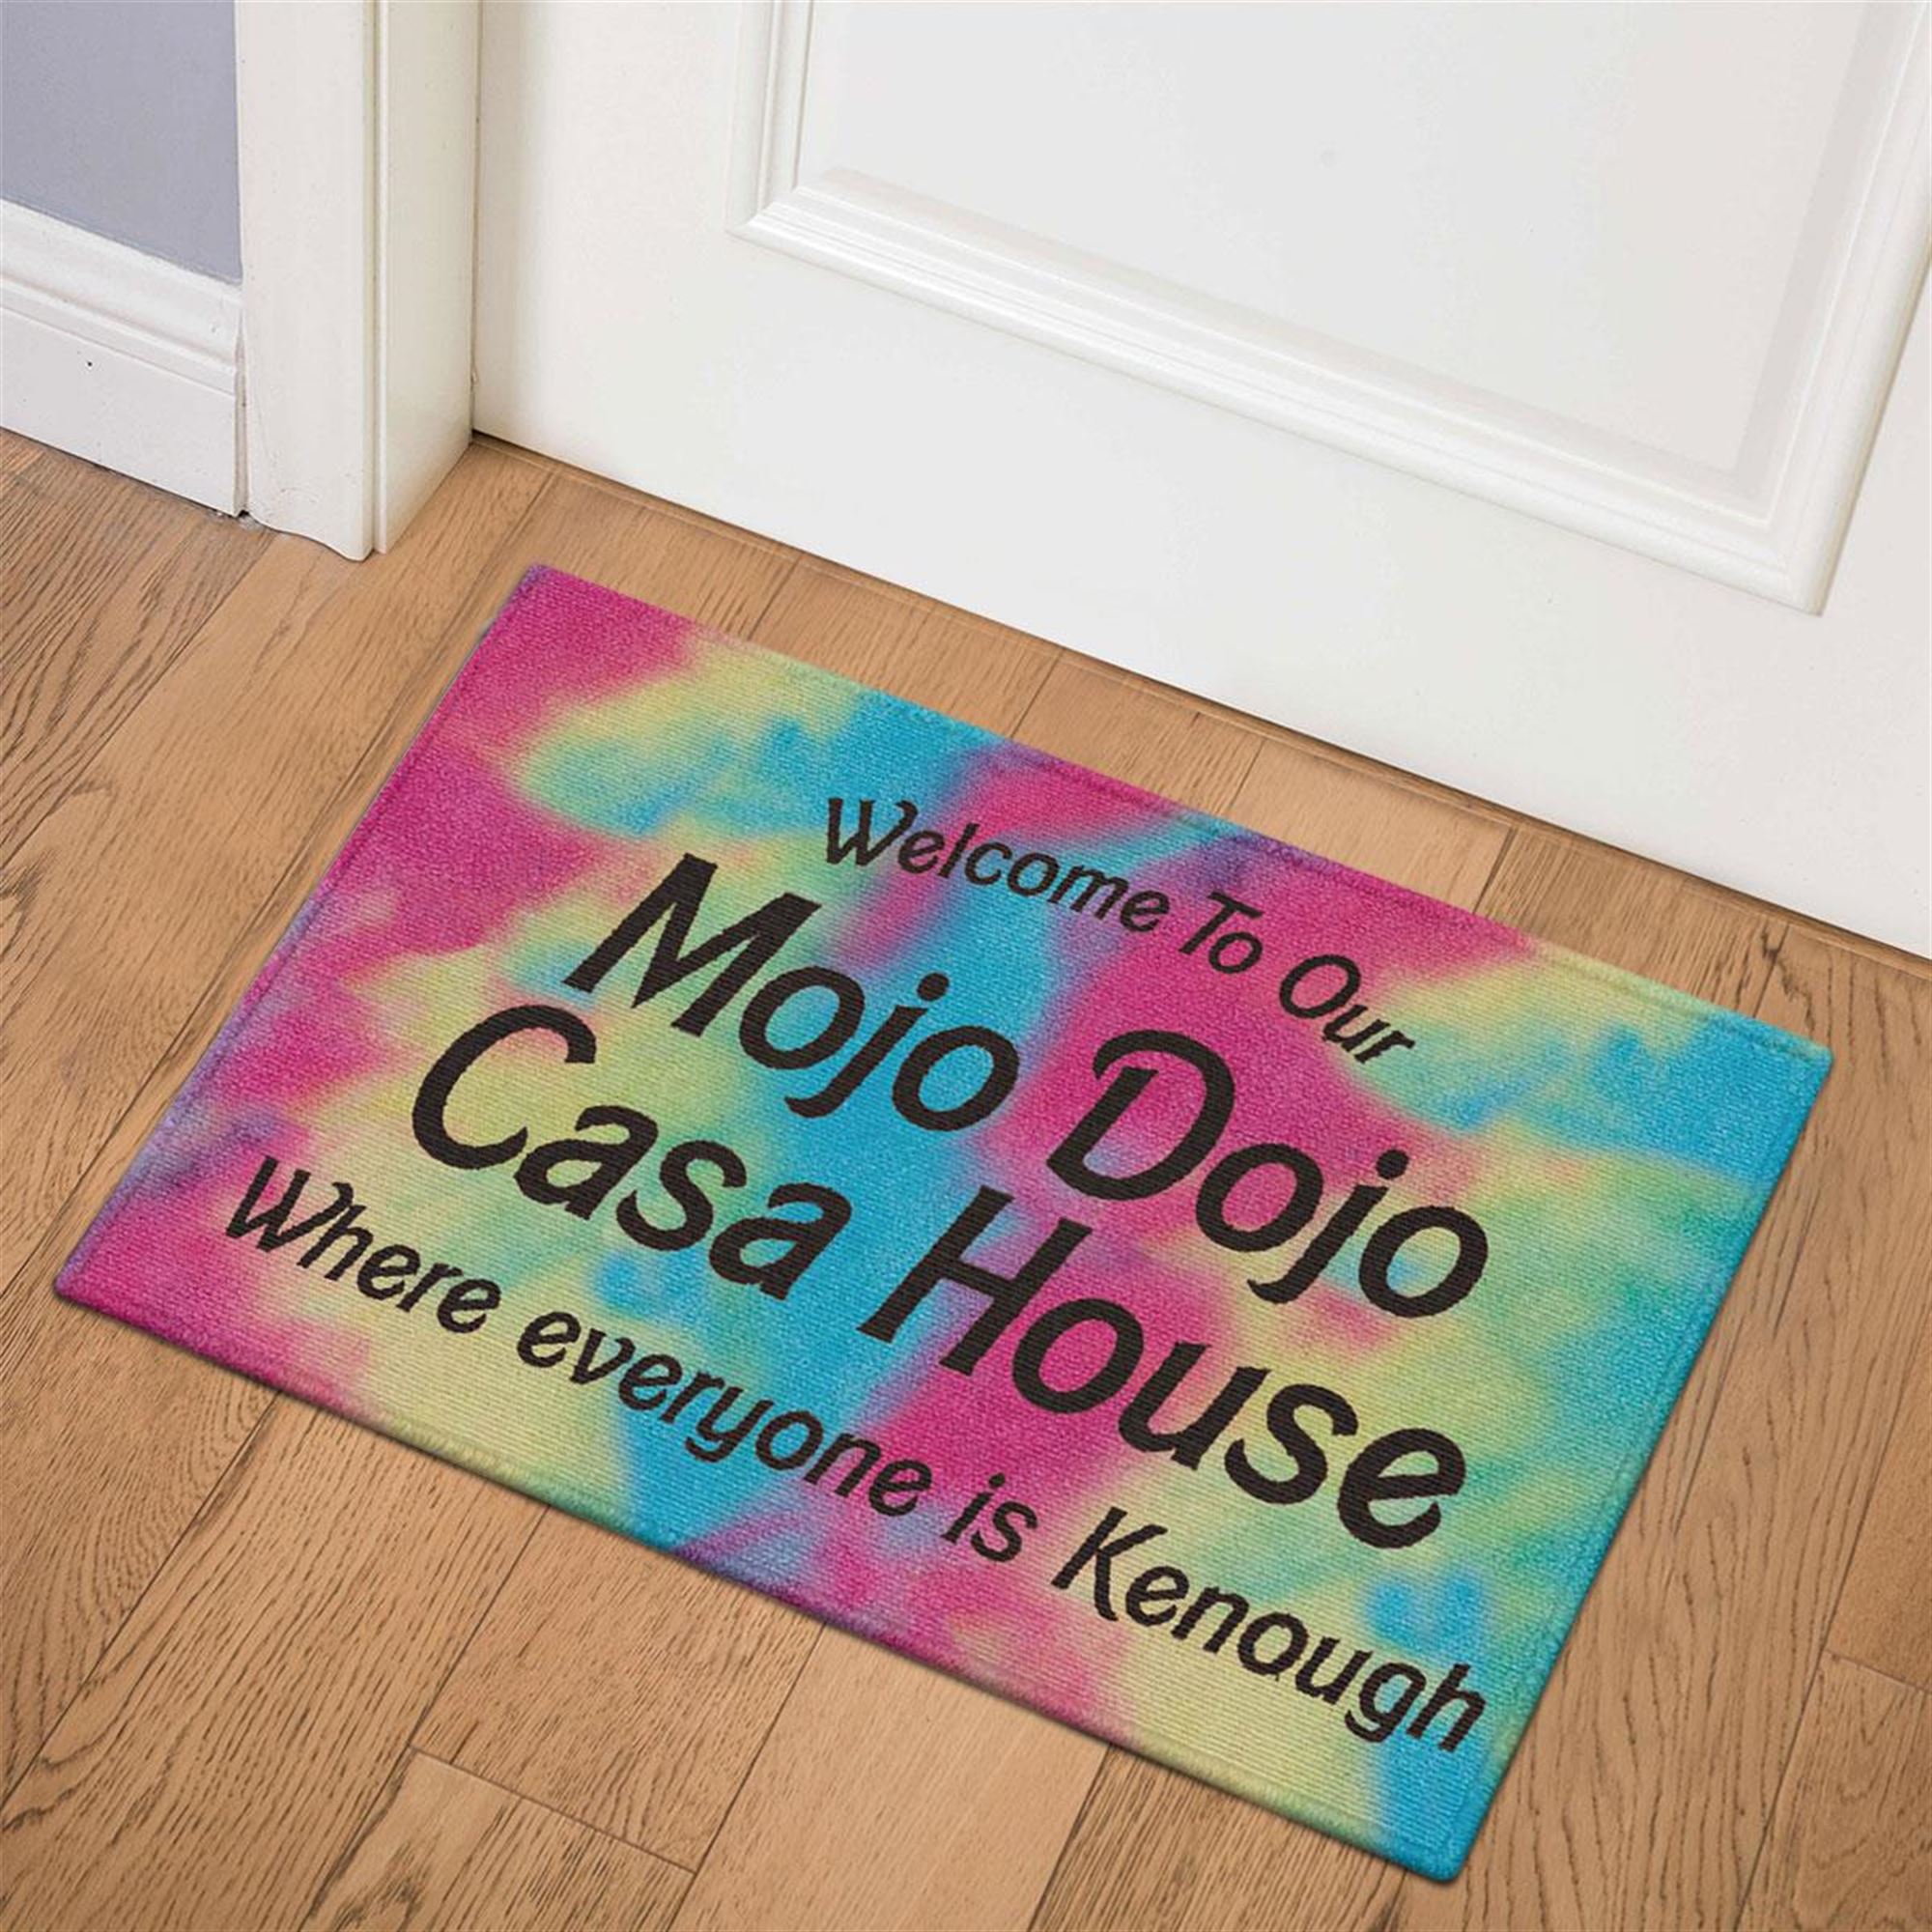 Kenough Welcome To Our Mojo Dojo Casa House Doormat